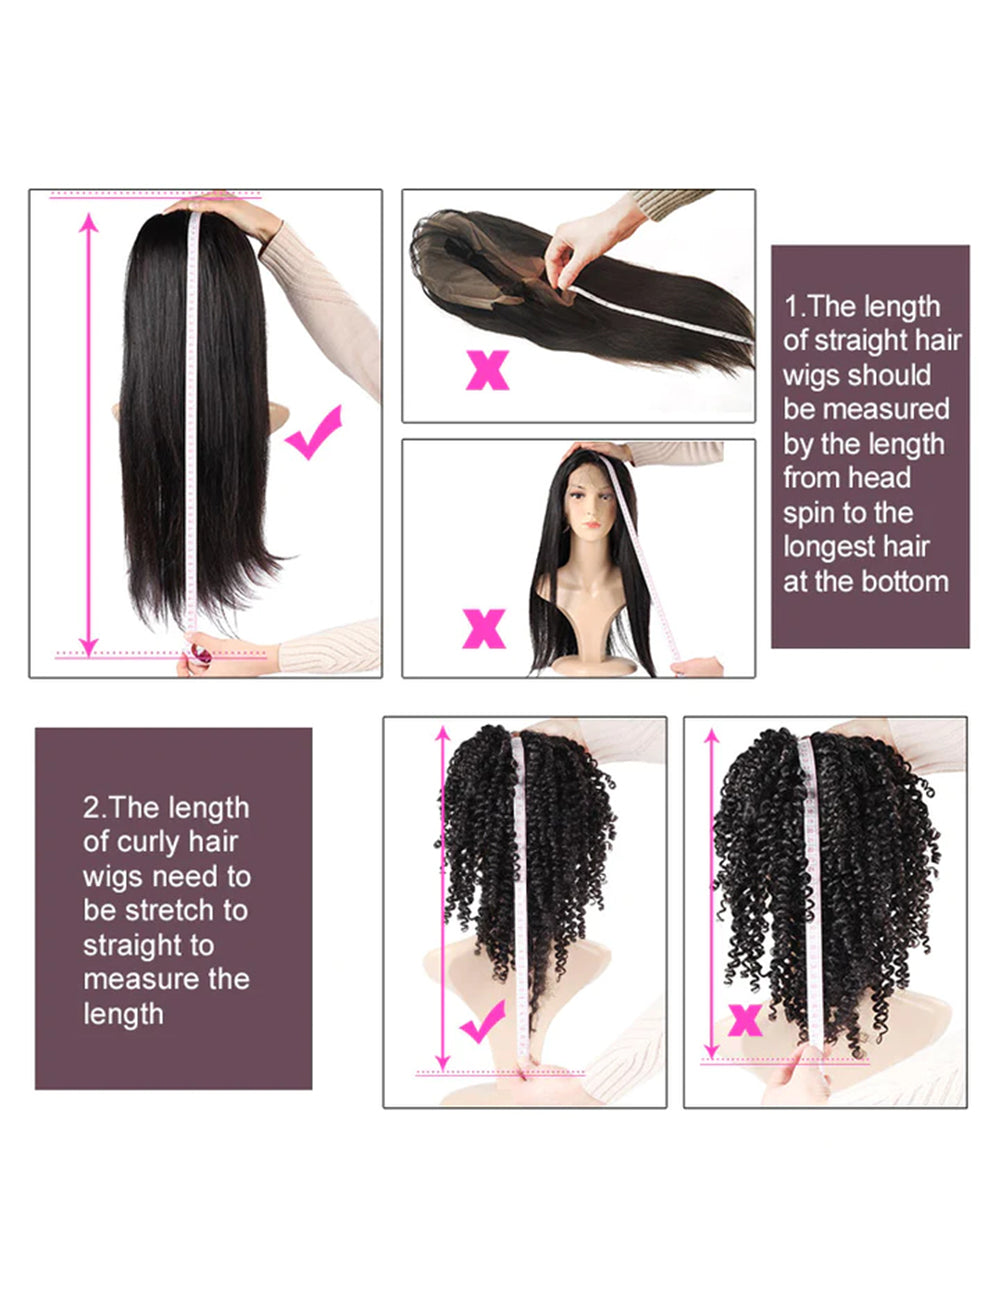 Loose Wave Wig 4x4 Lace Closure Wig Malaysian Human Hair Wigs